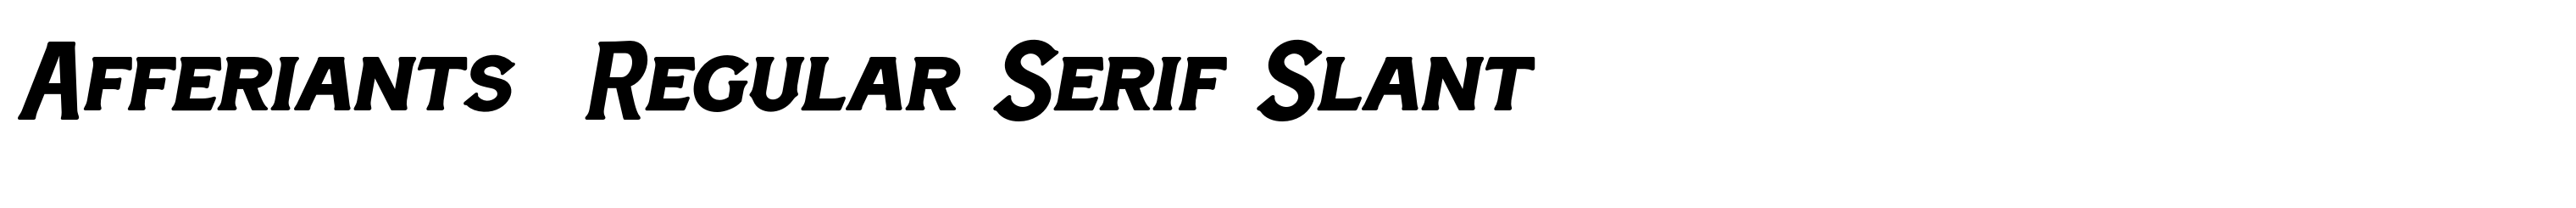 Afferiants  Regular Serif Slant